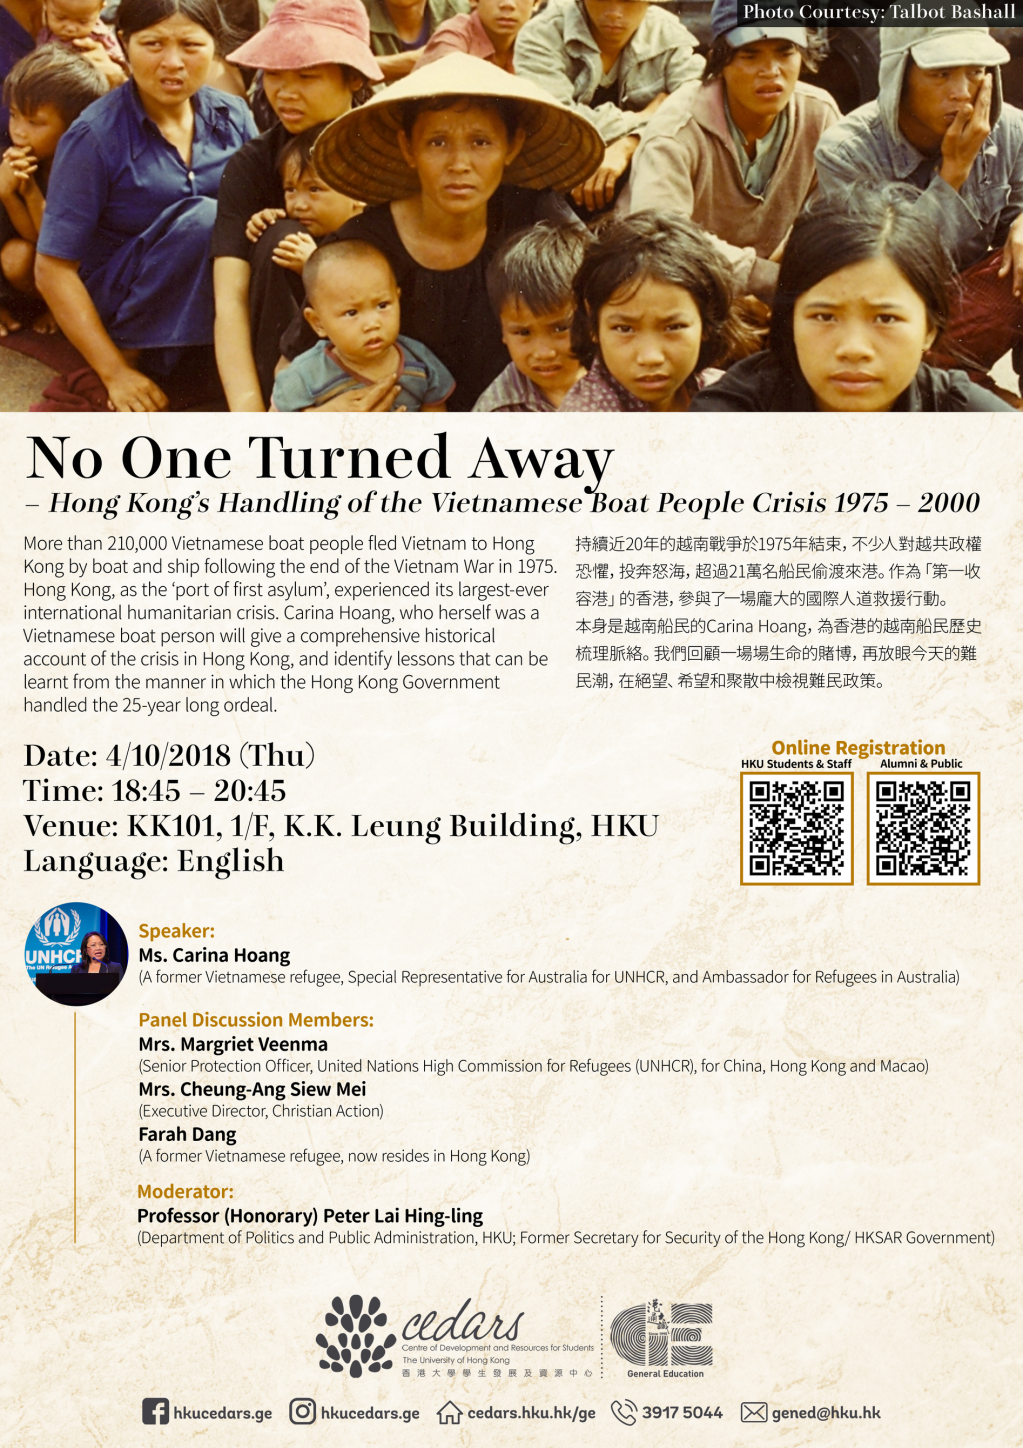 No One Turned Away: Hong Kong's Handling of the Vietnamese Boat People Crisis 1975 - 2000